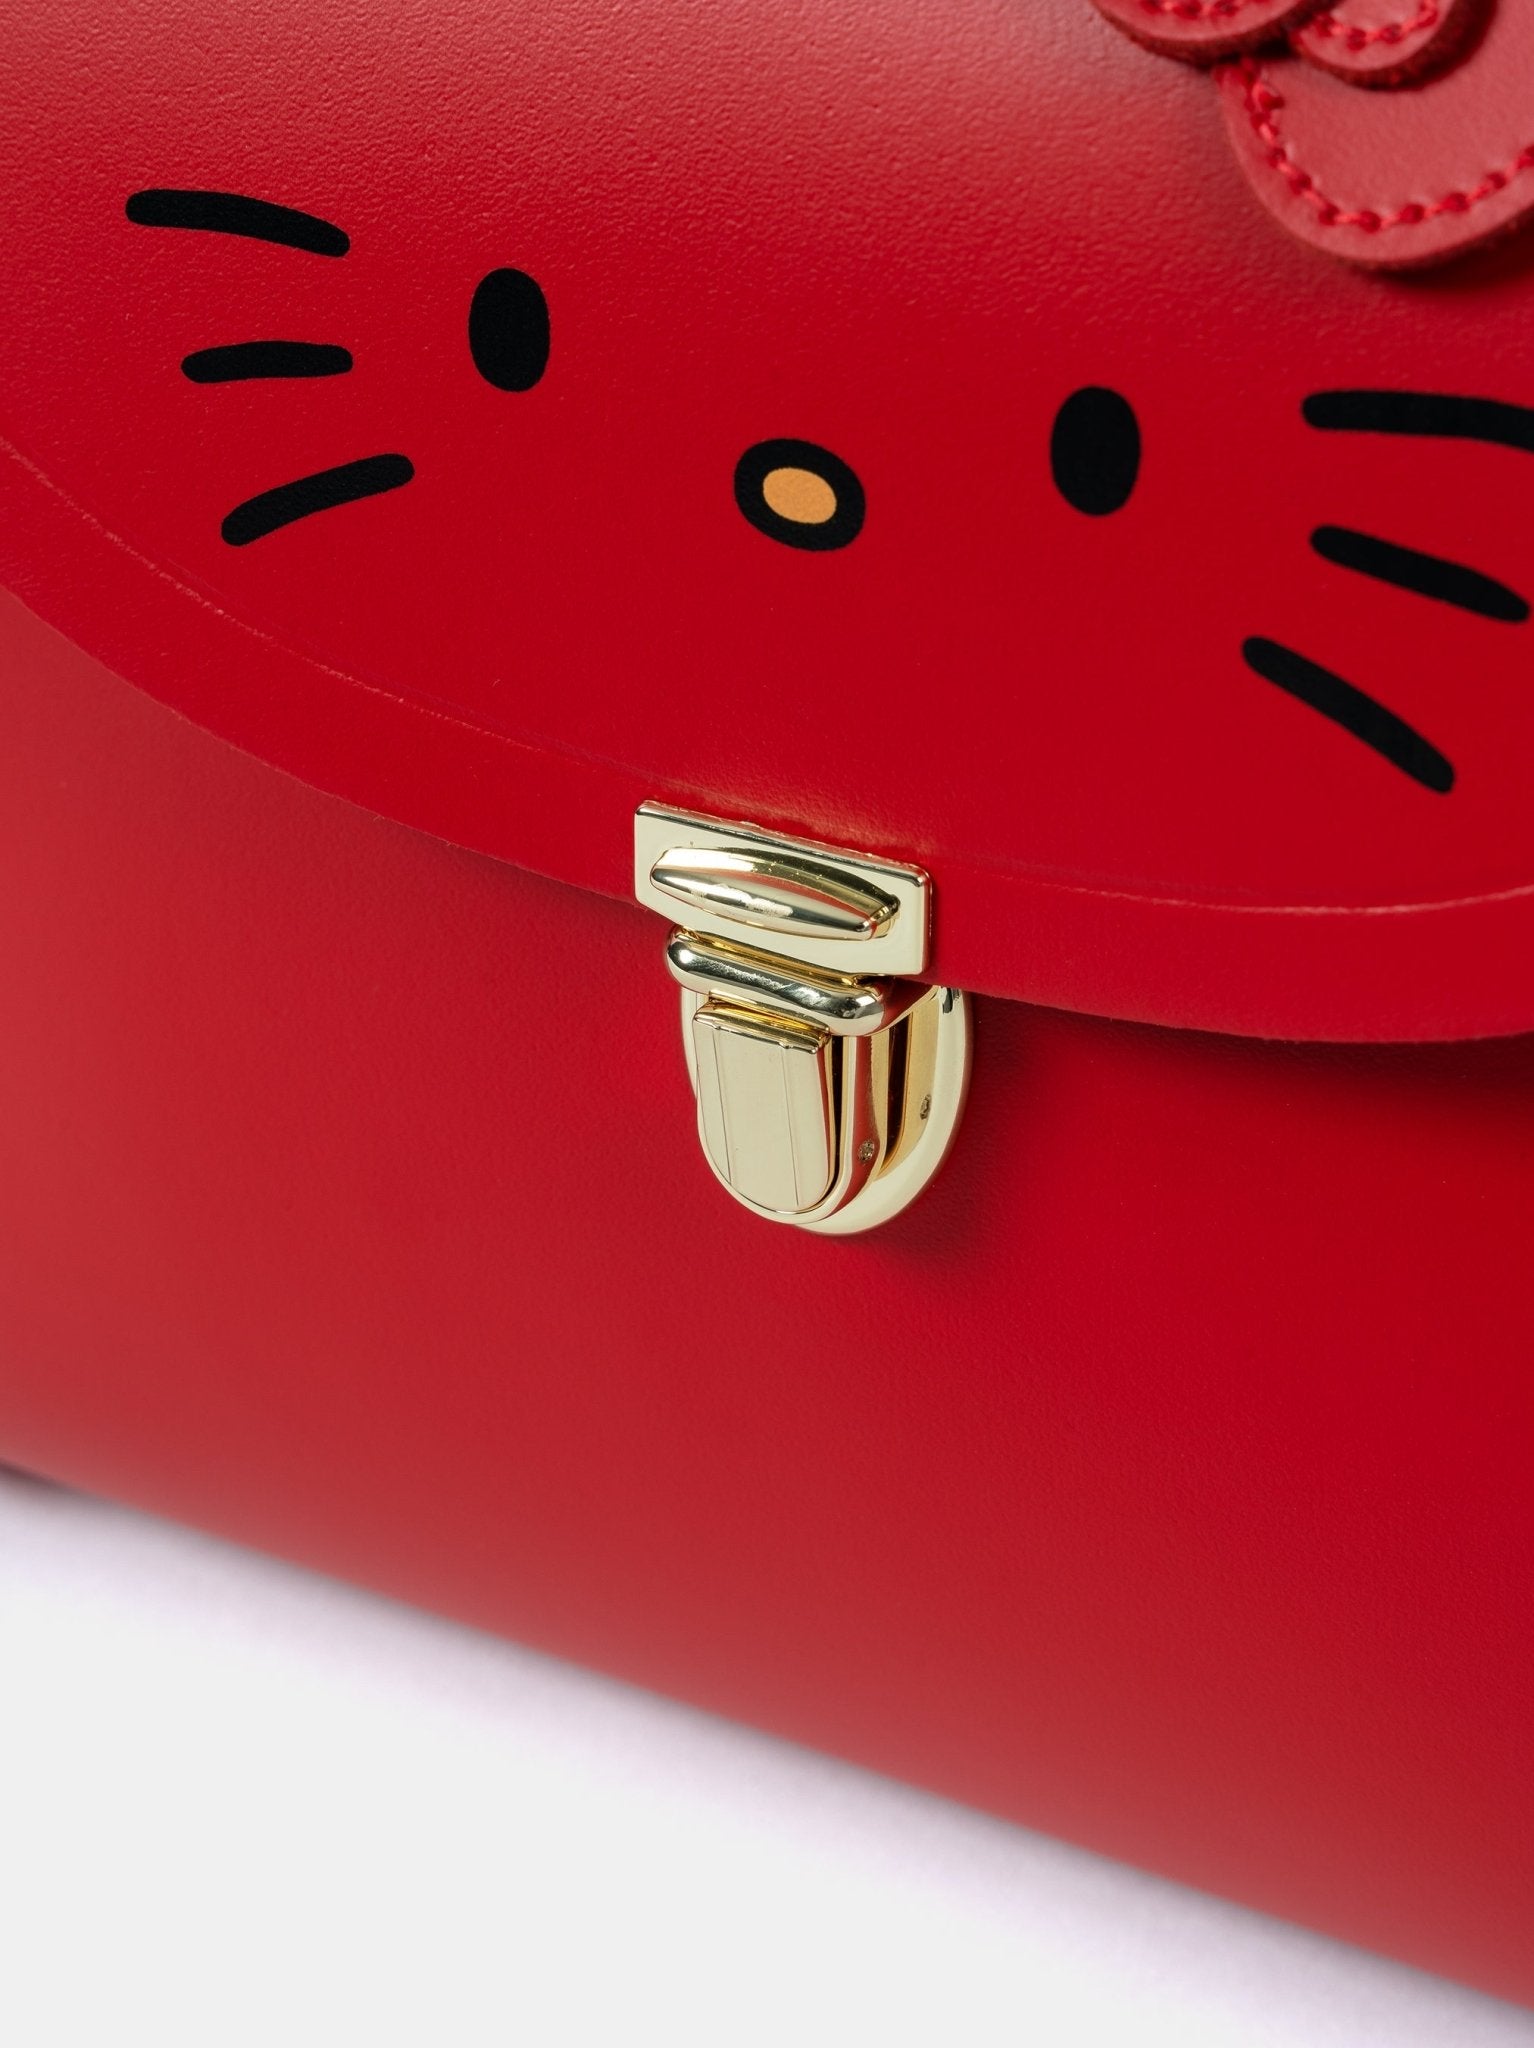 The Hello Kitty Poppy Backpack - Red - The Cambridge Satchel Company EU Store